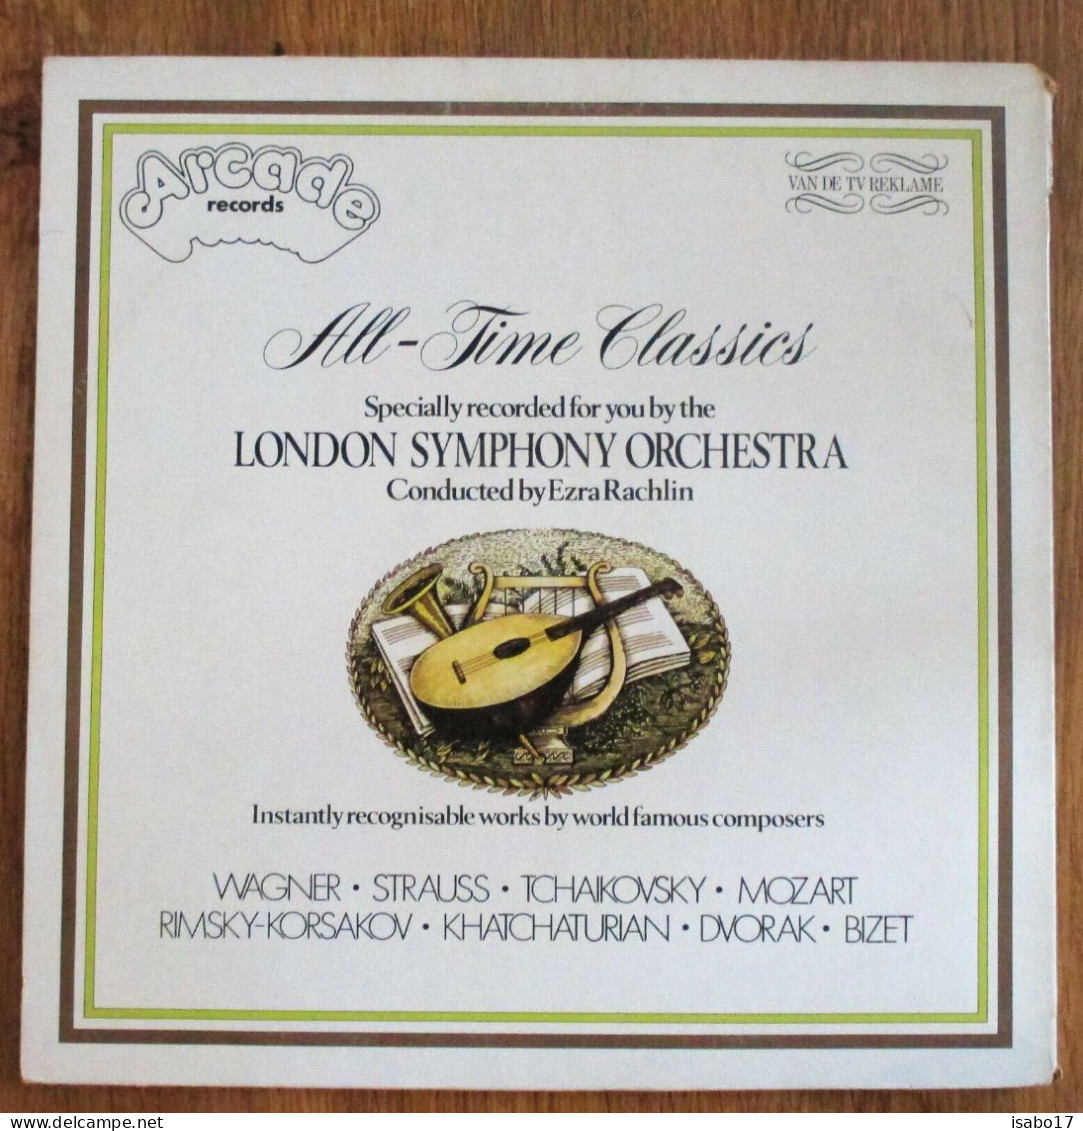 All-Time Classics [Vinyl LP] - Opéra & Opérette